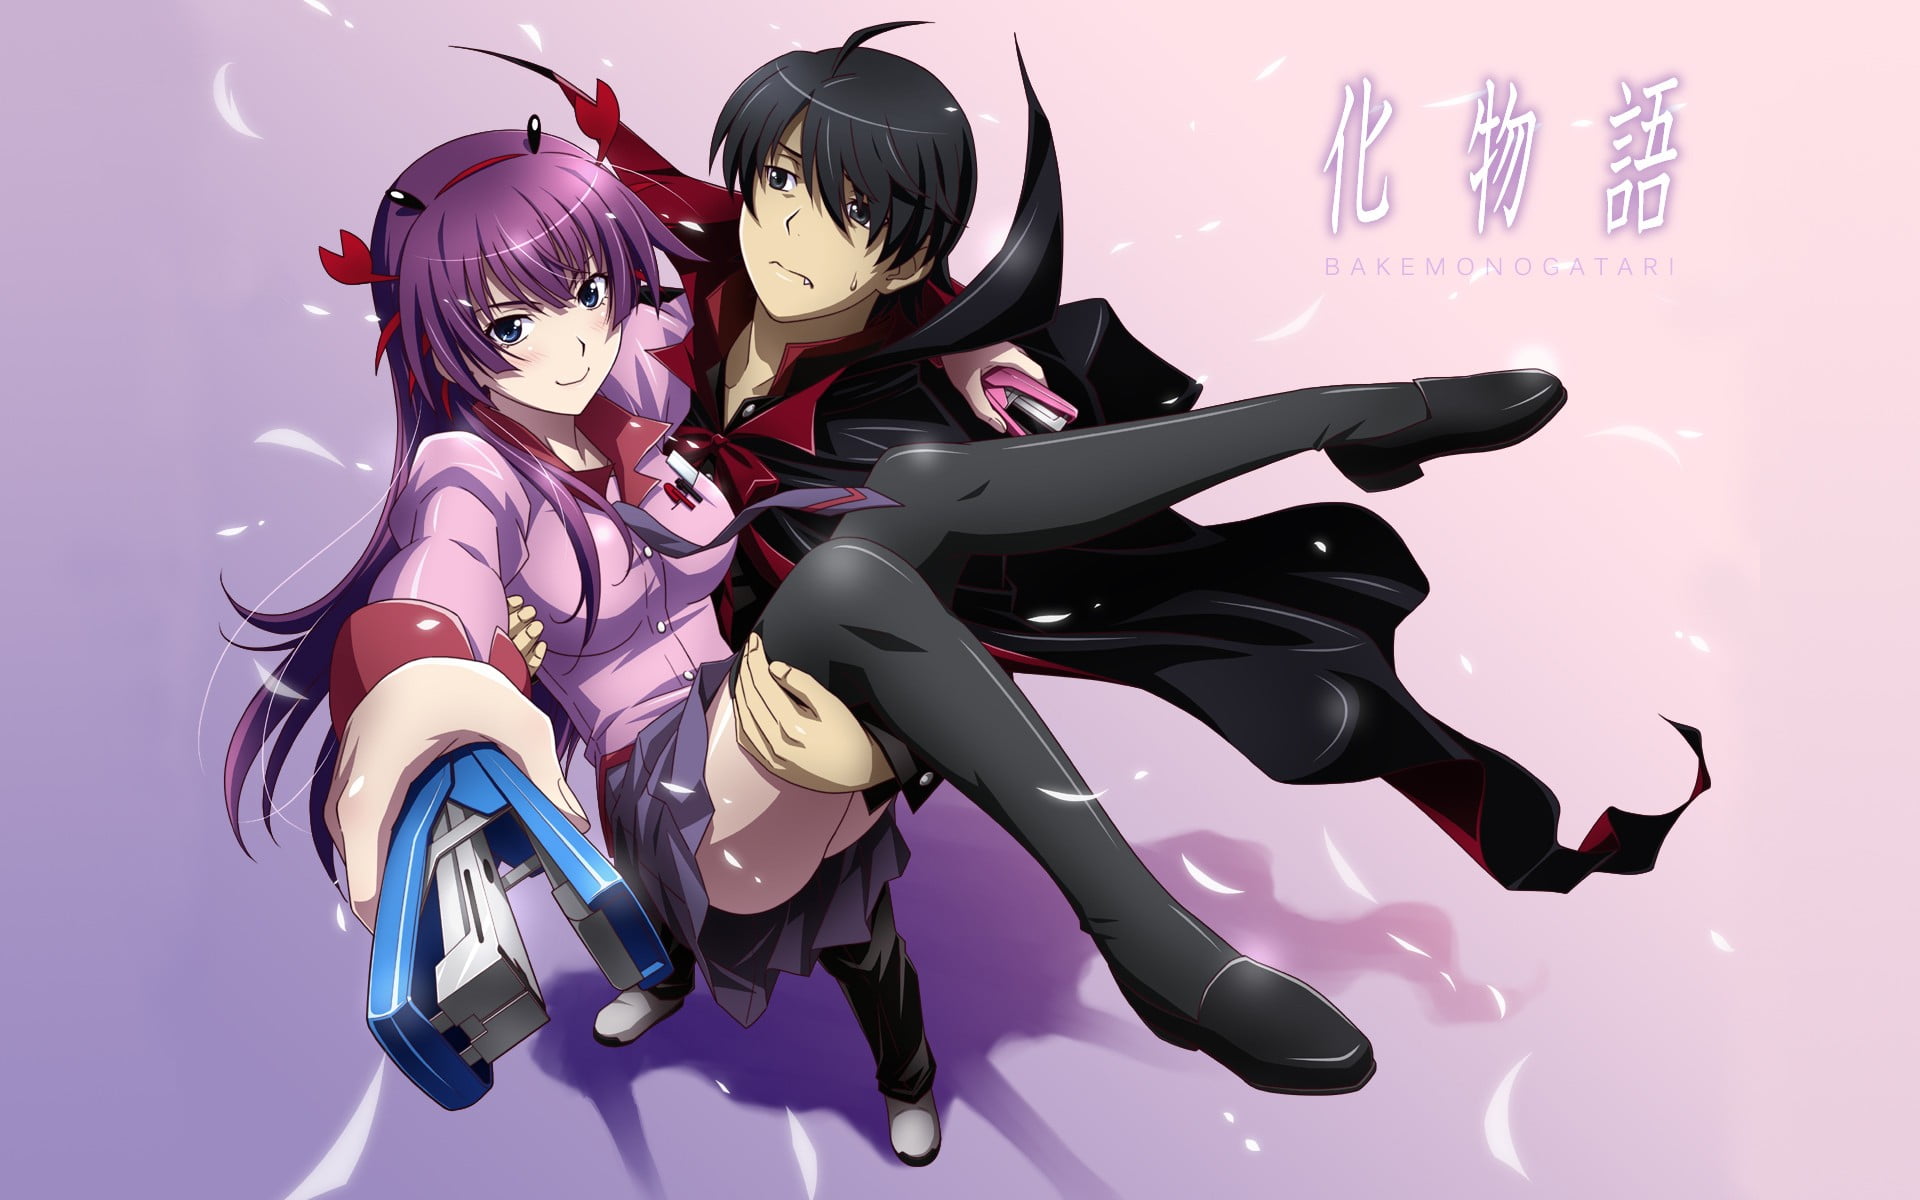 man and woman anime character graphic poster, Monogatari Series